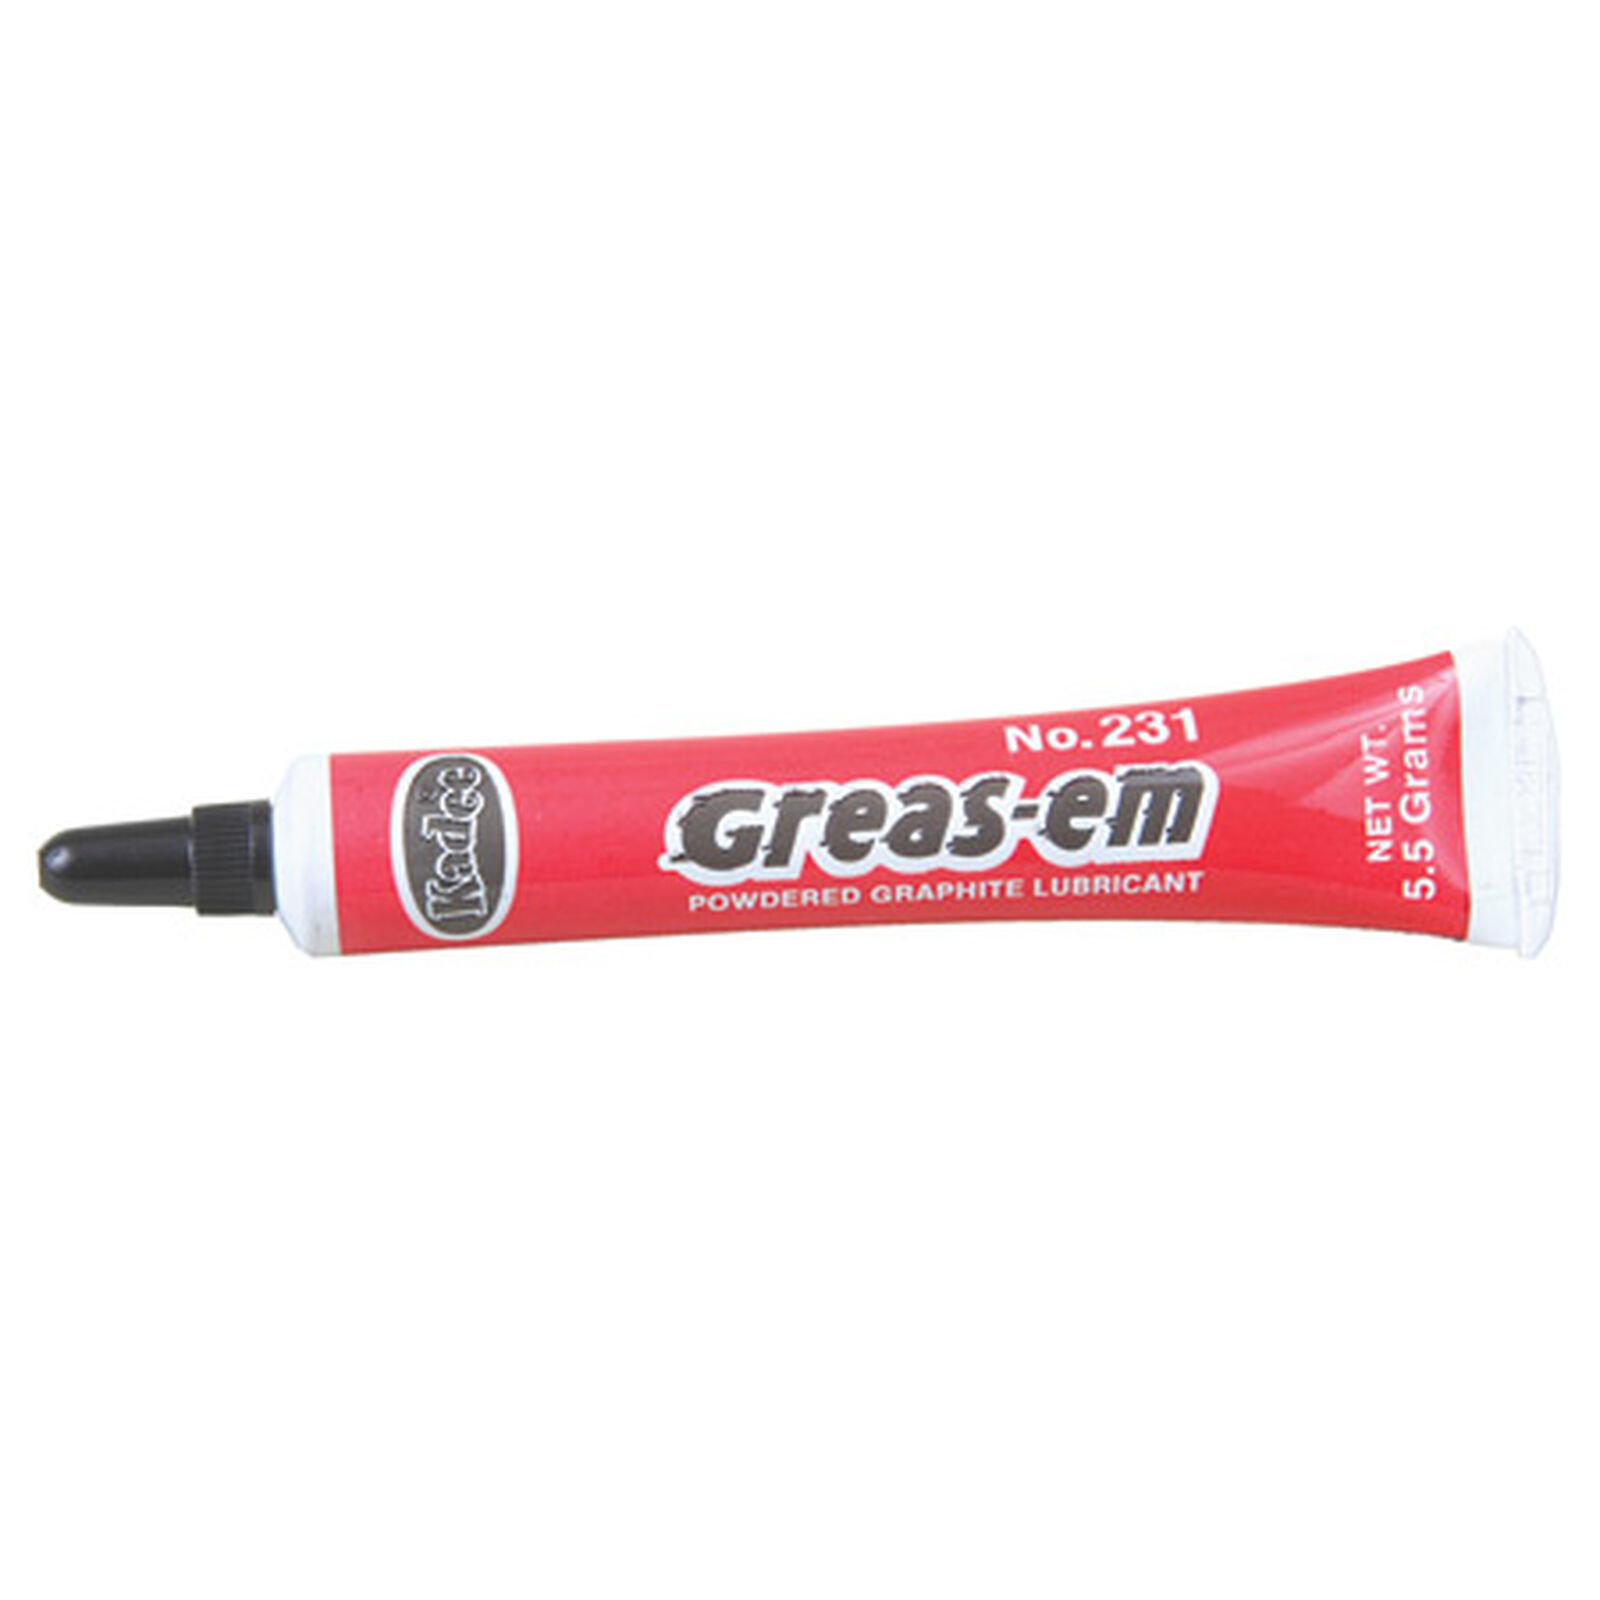 "Greas-em" Dry Graphite Lubricant, 5.5 Grams